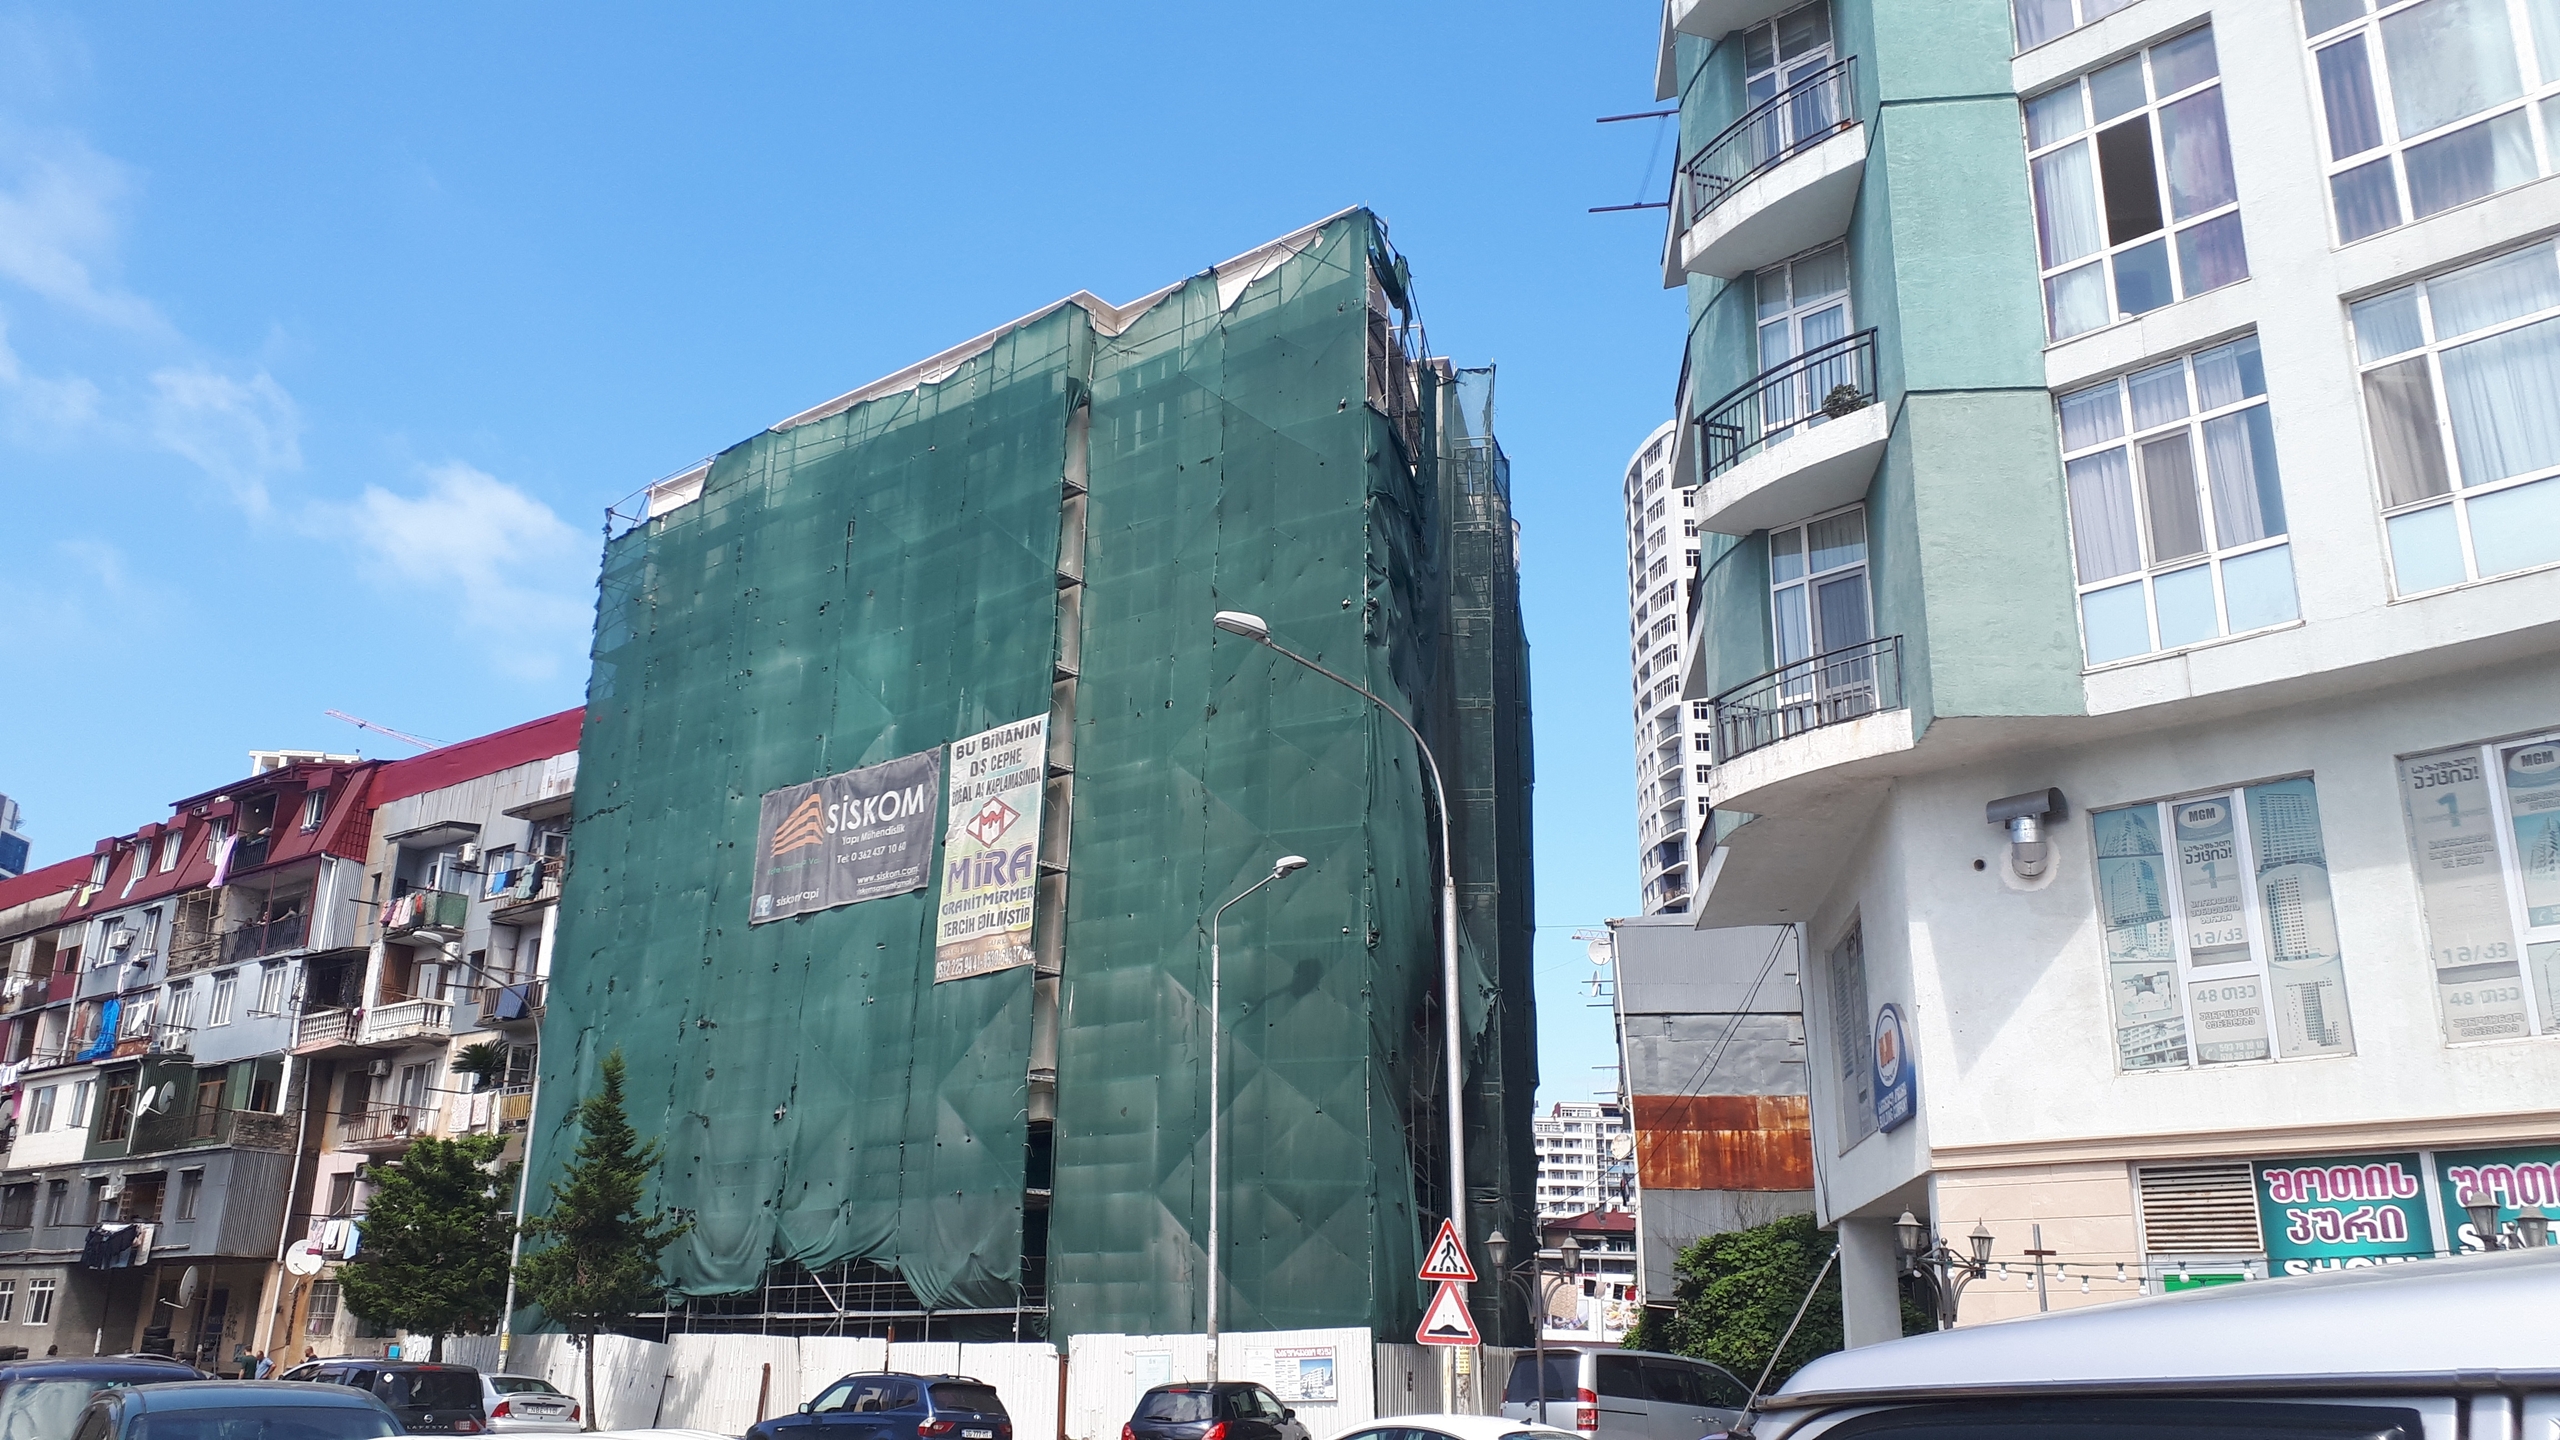 7 Loria Street in Batumi